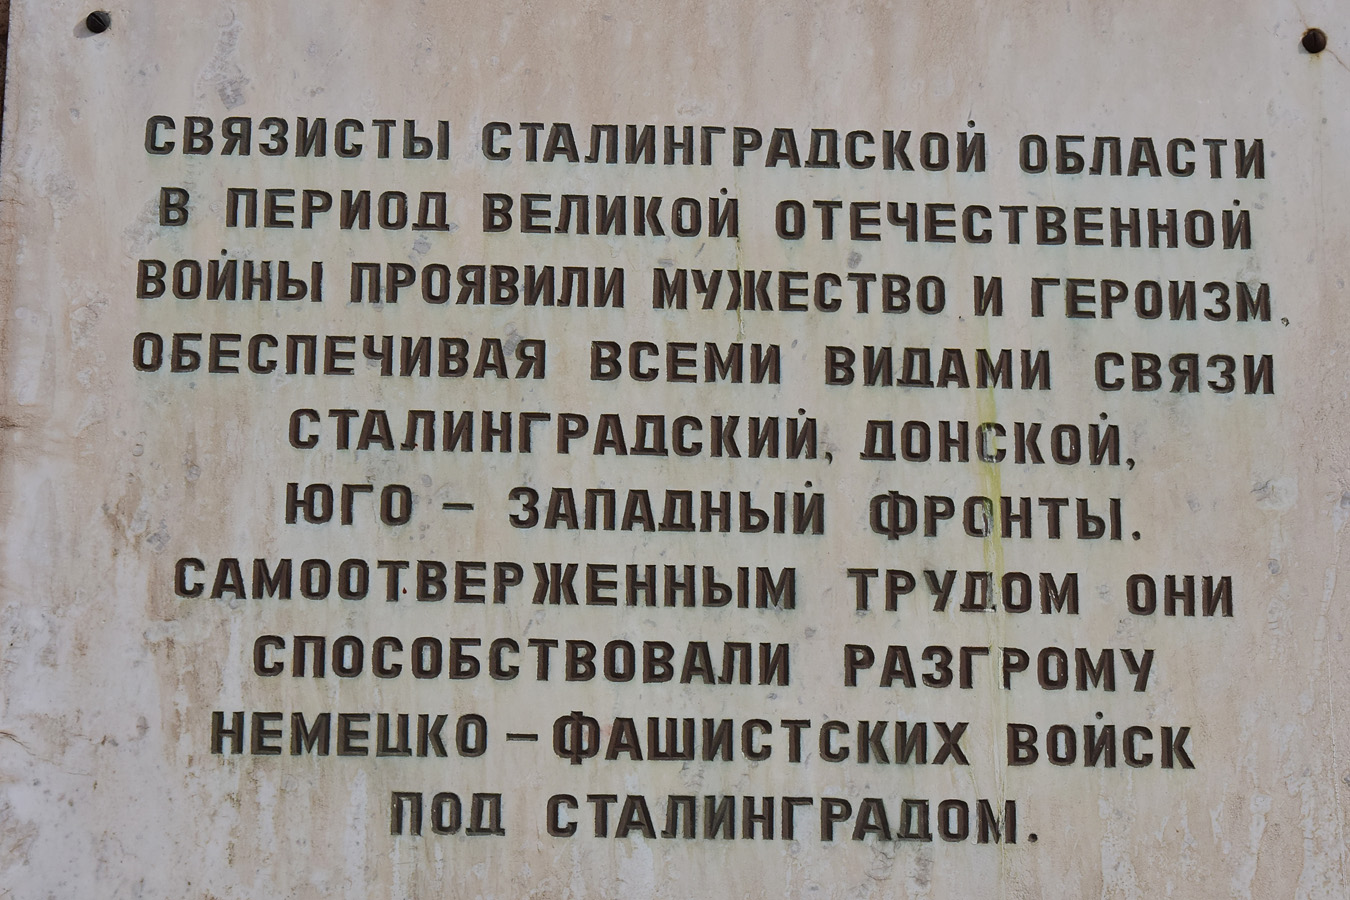 Volgograd, Улица Мира, 9. Volgograd — Memorial plaques